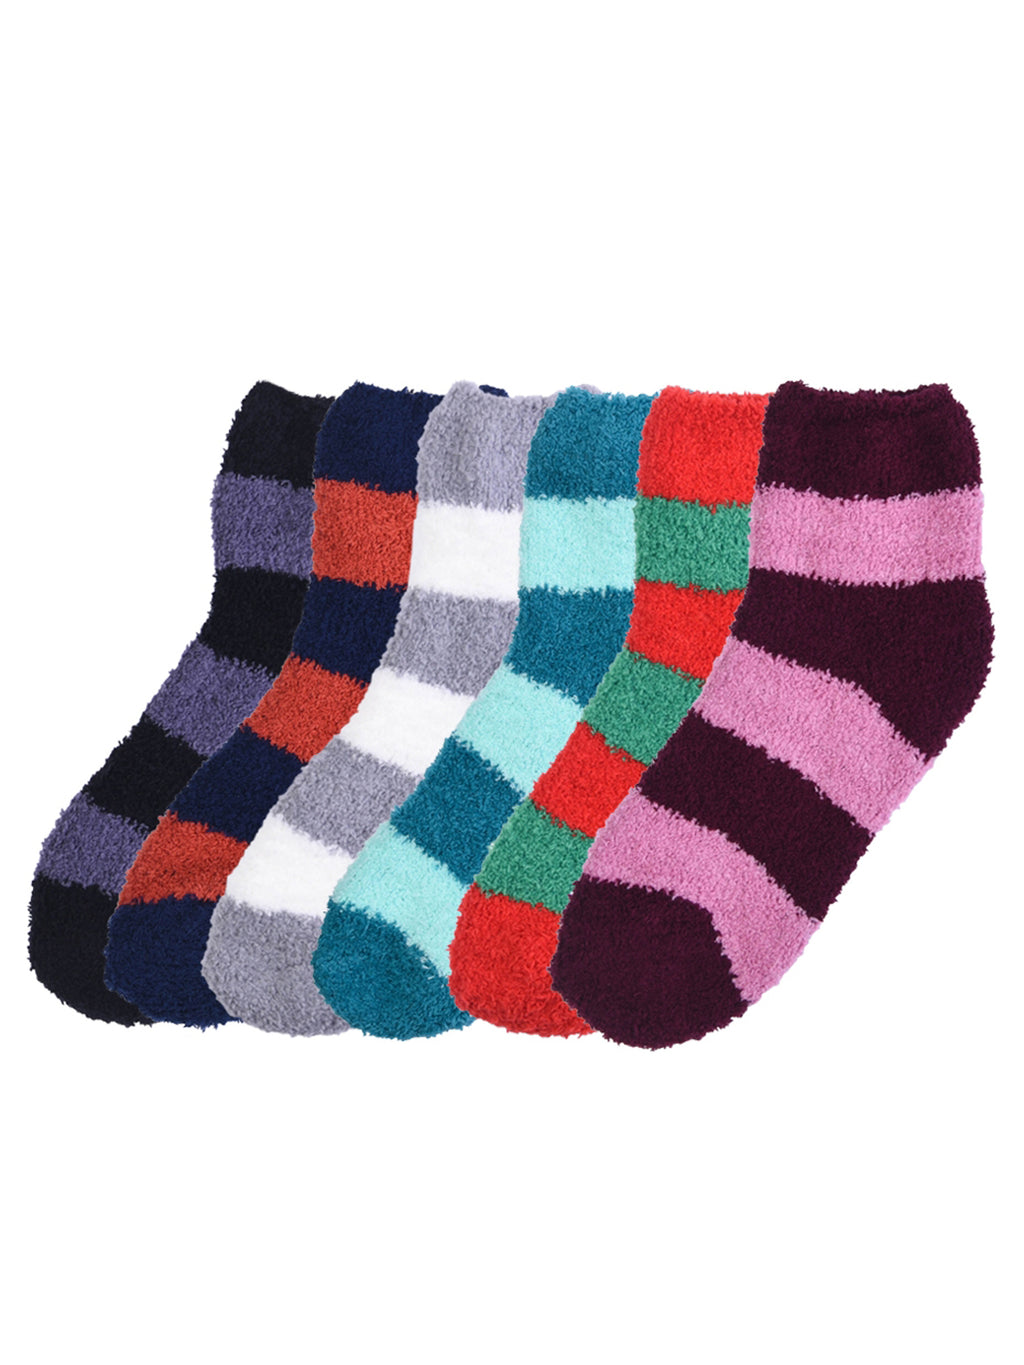 Two-Tone Striped 6 Pack Fuzzy Womens Slipper Socks